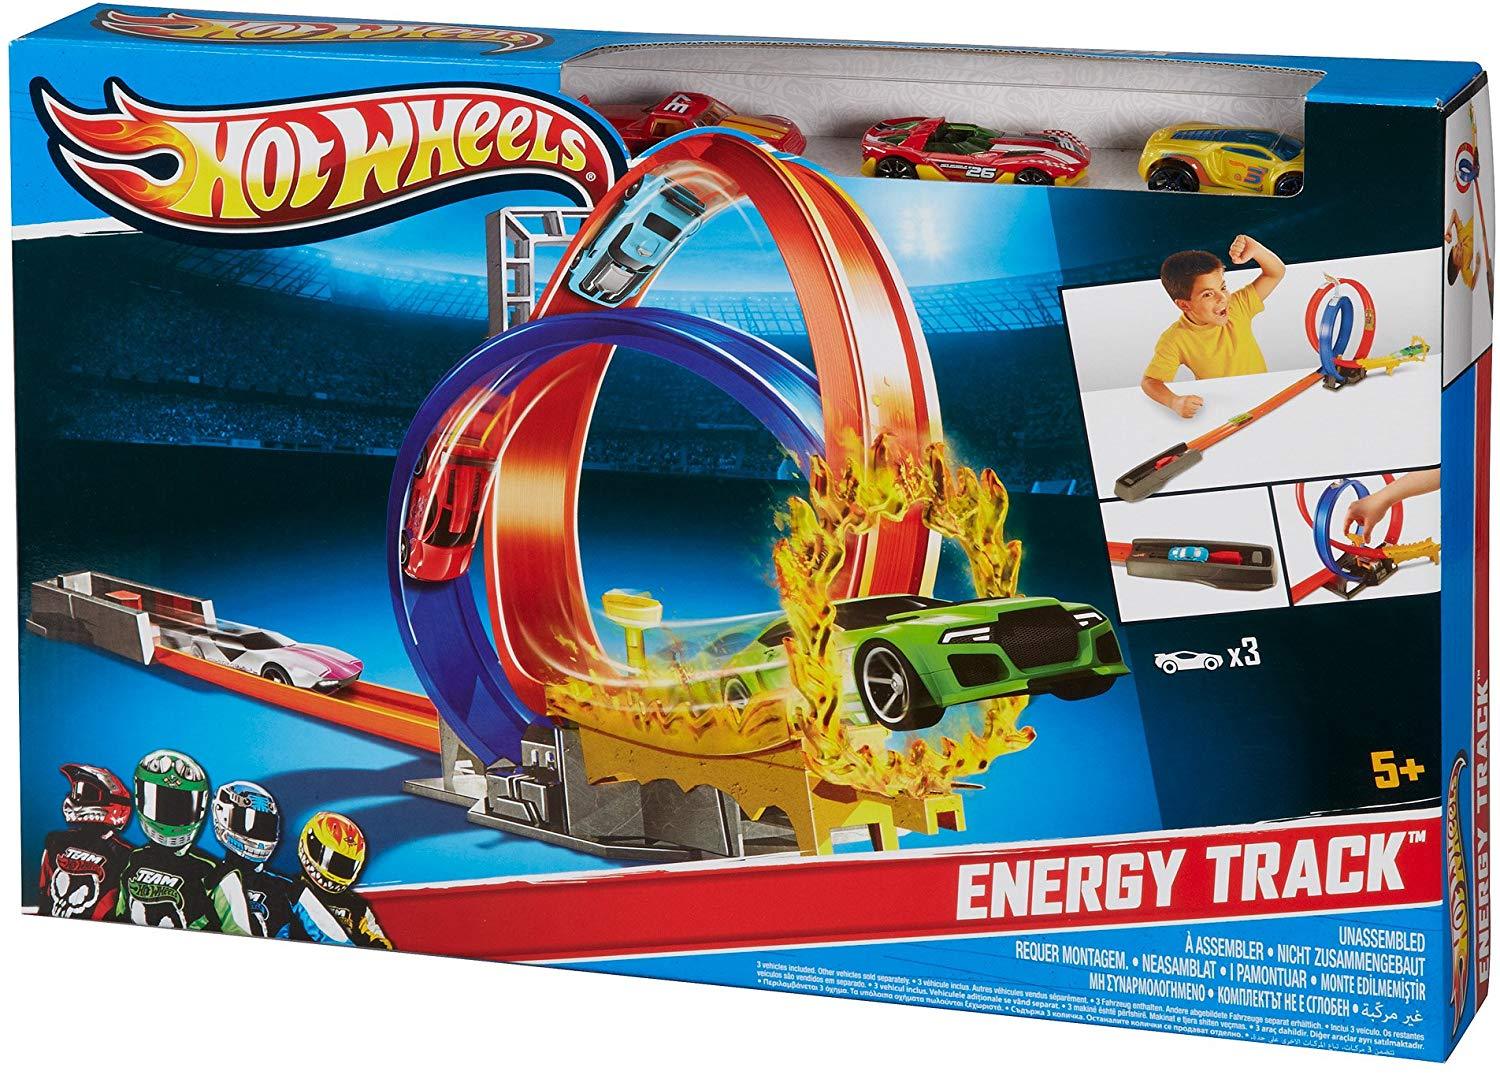 Hot Wheels Energy Track Playset